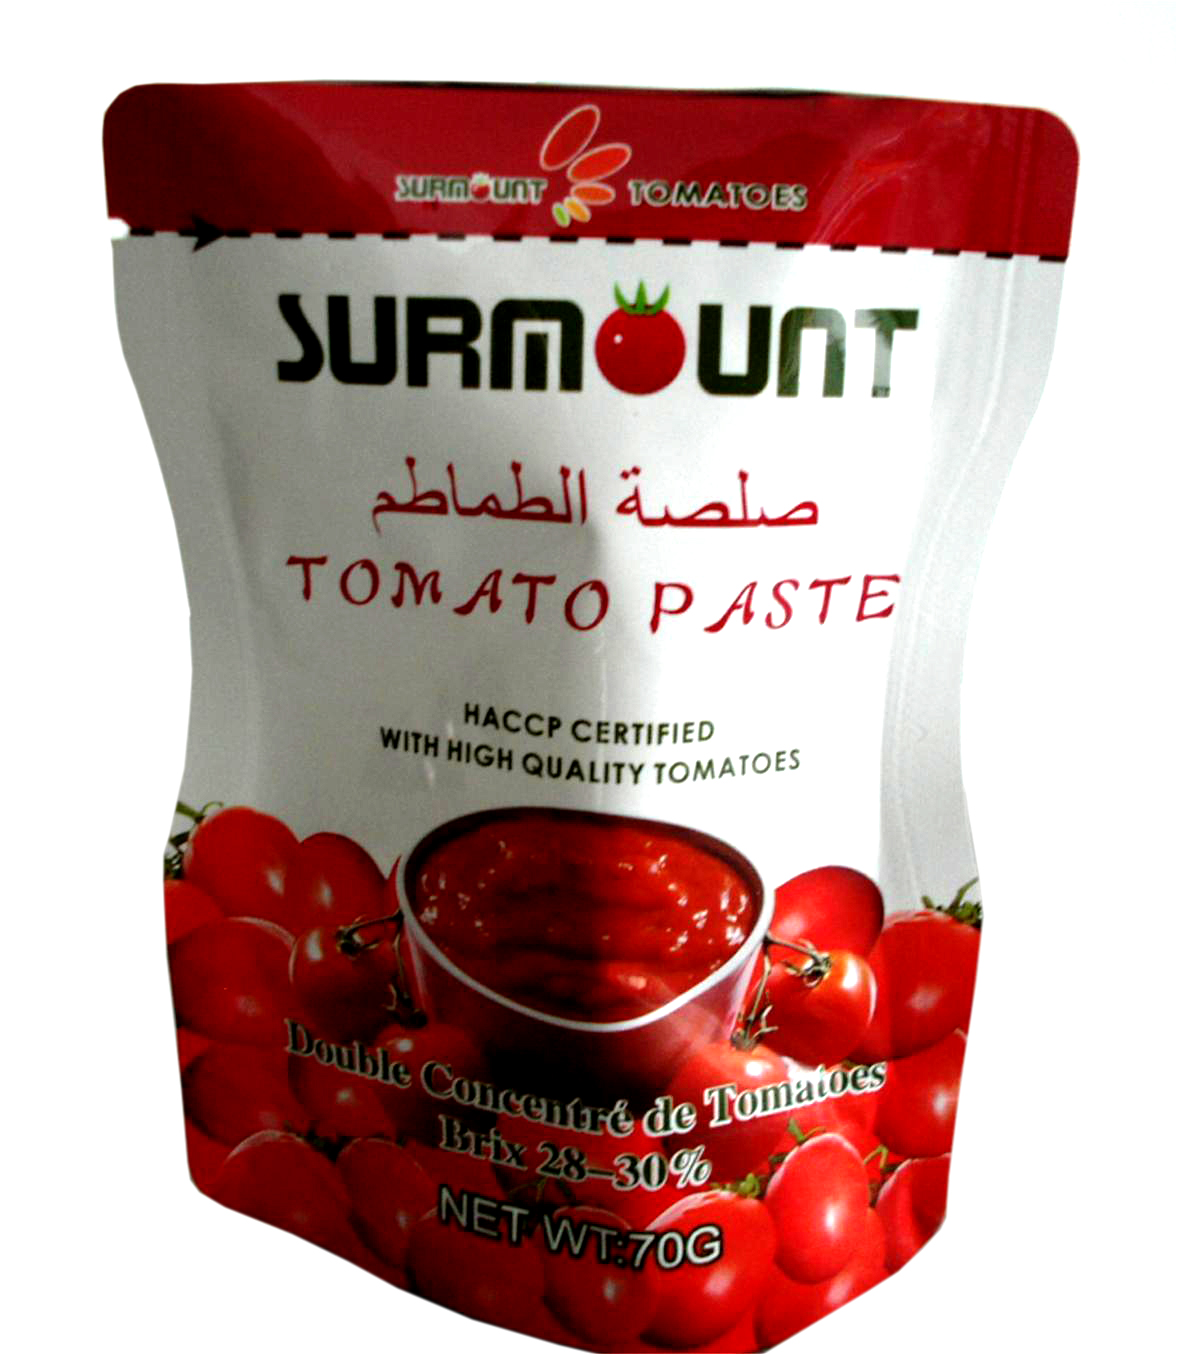 Poşet Domates salçası 70g×25×4 - Bele sahip stand - domates salçası2-5